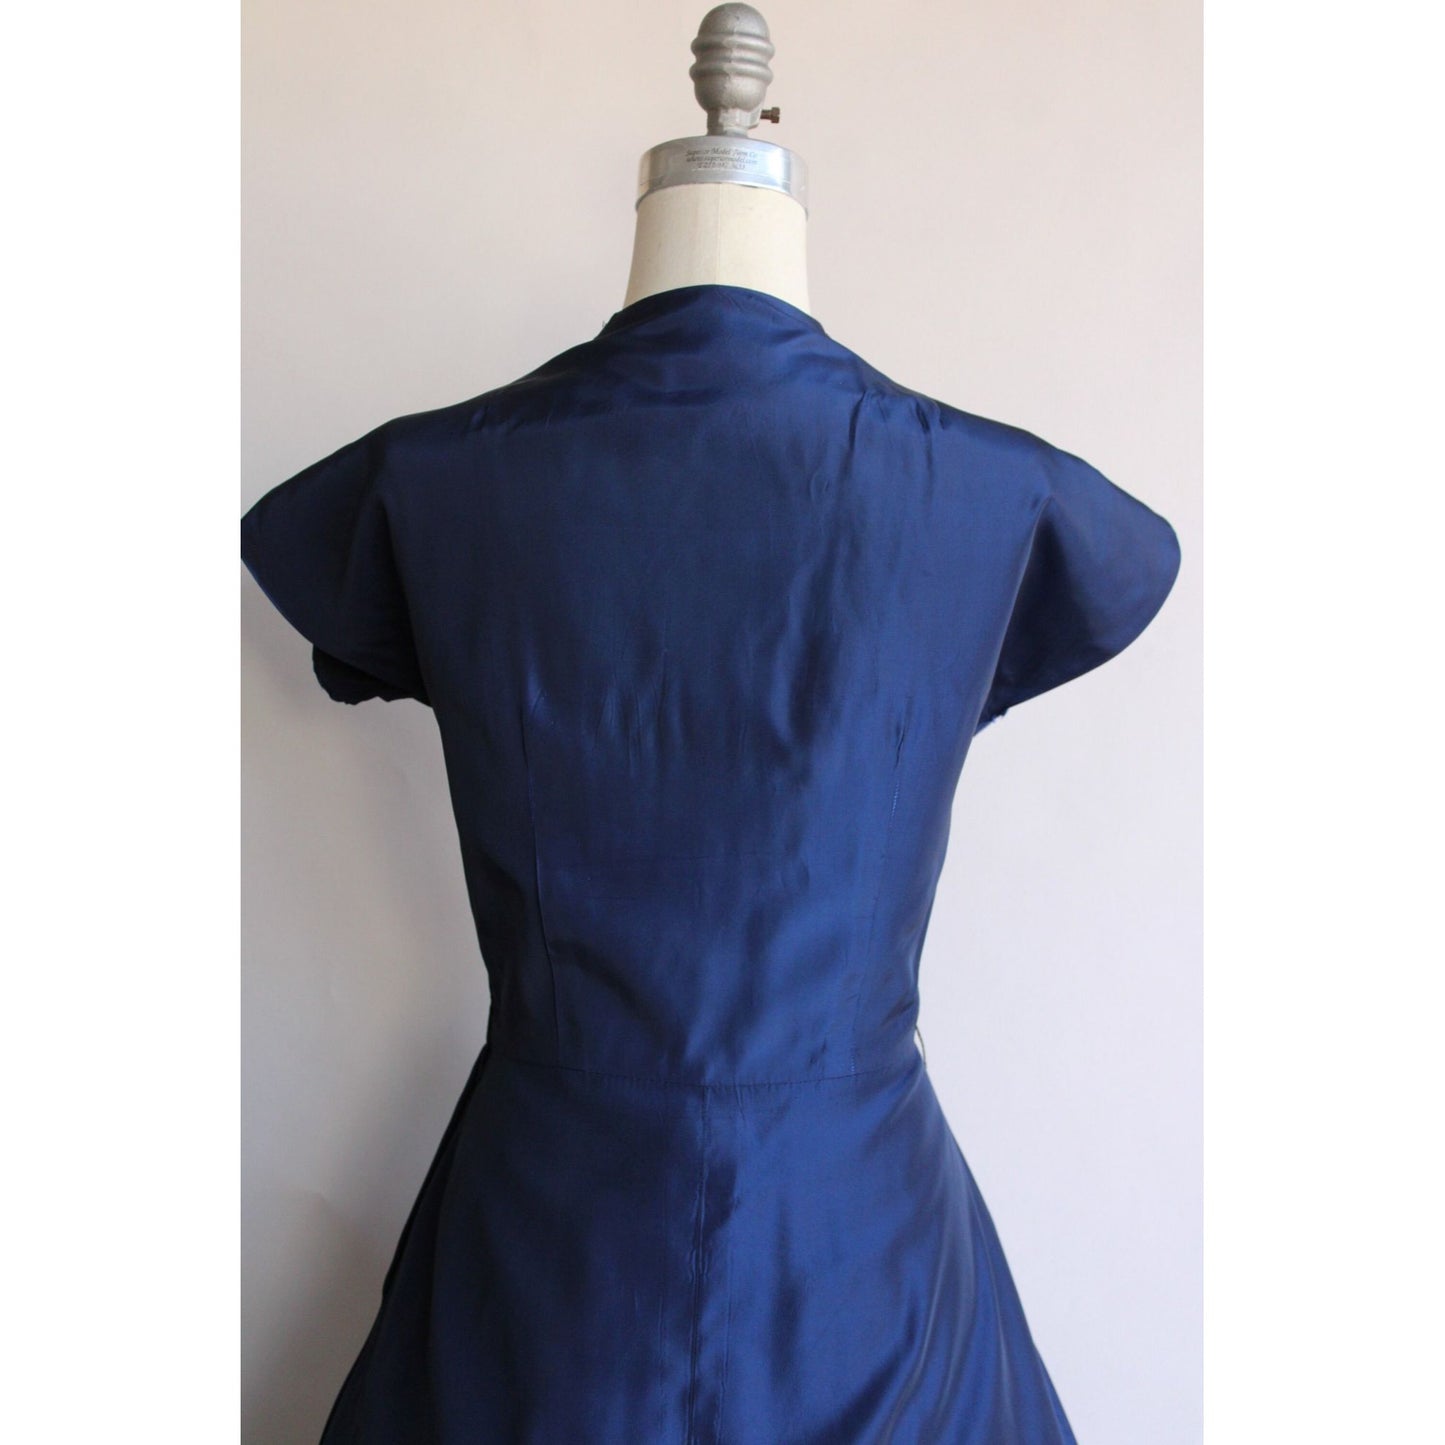 Vintage 1950s Ann Kauffman Navy Blue Taffeta Dress